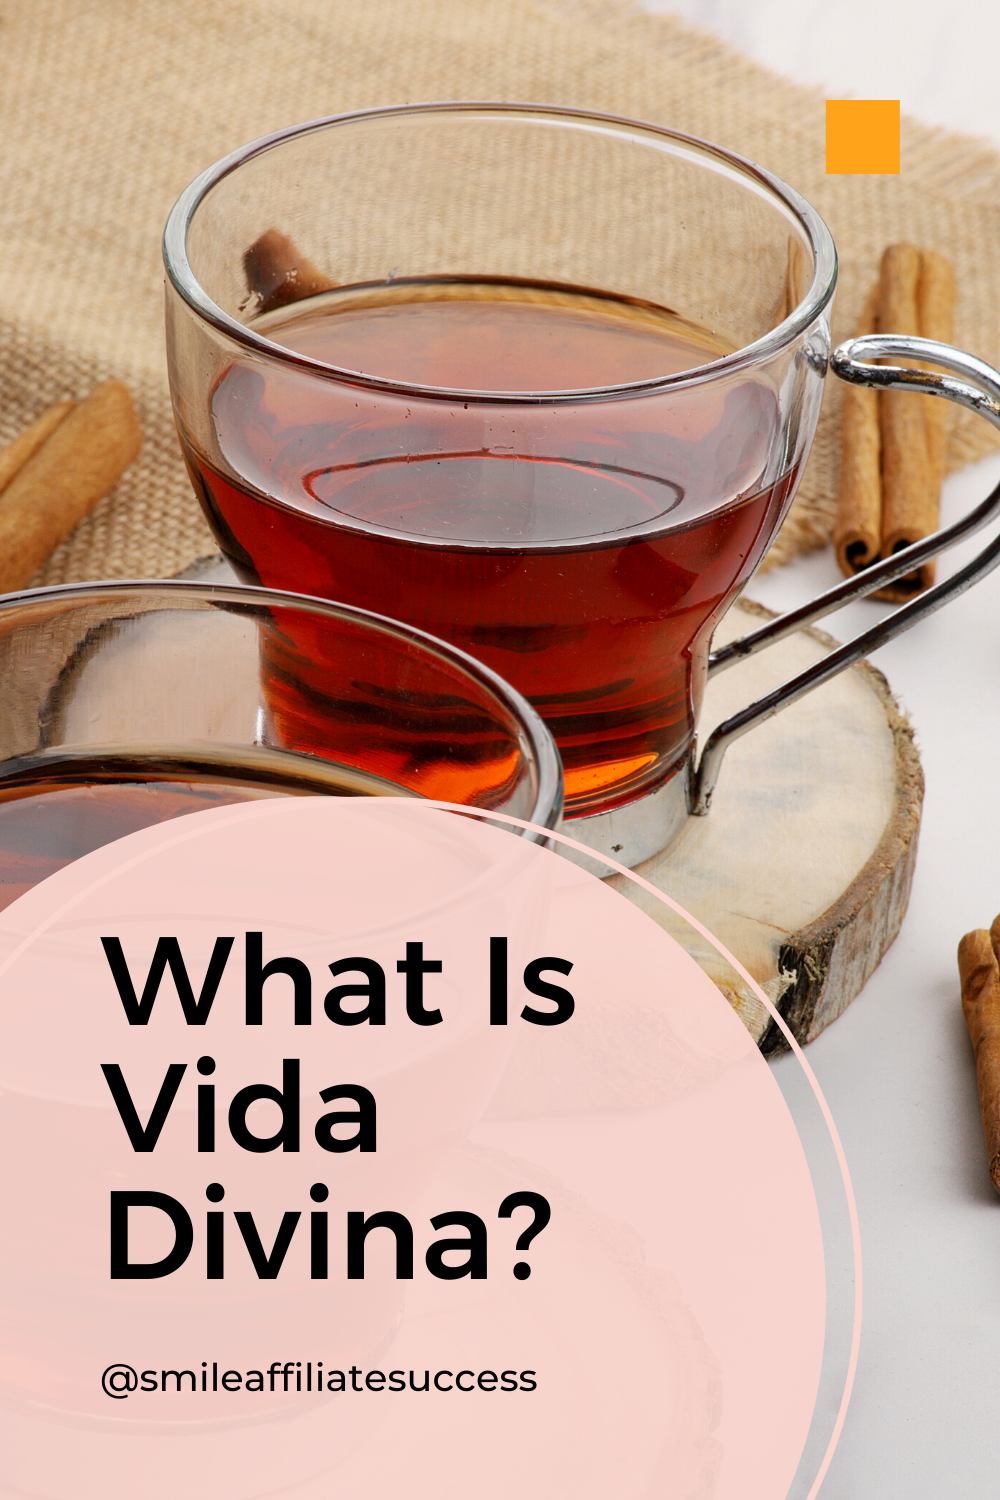 What Is Vida Divina?